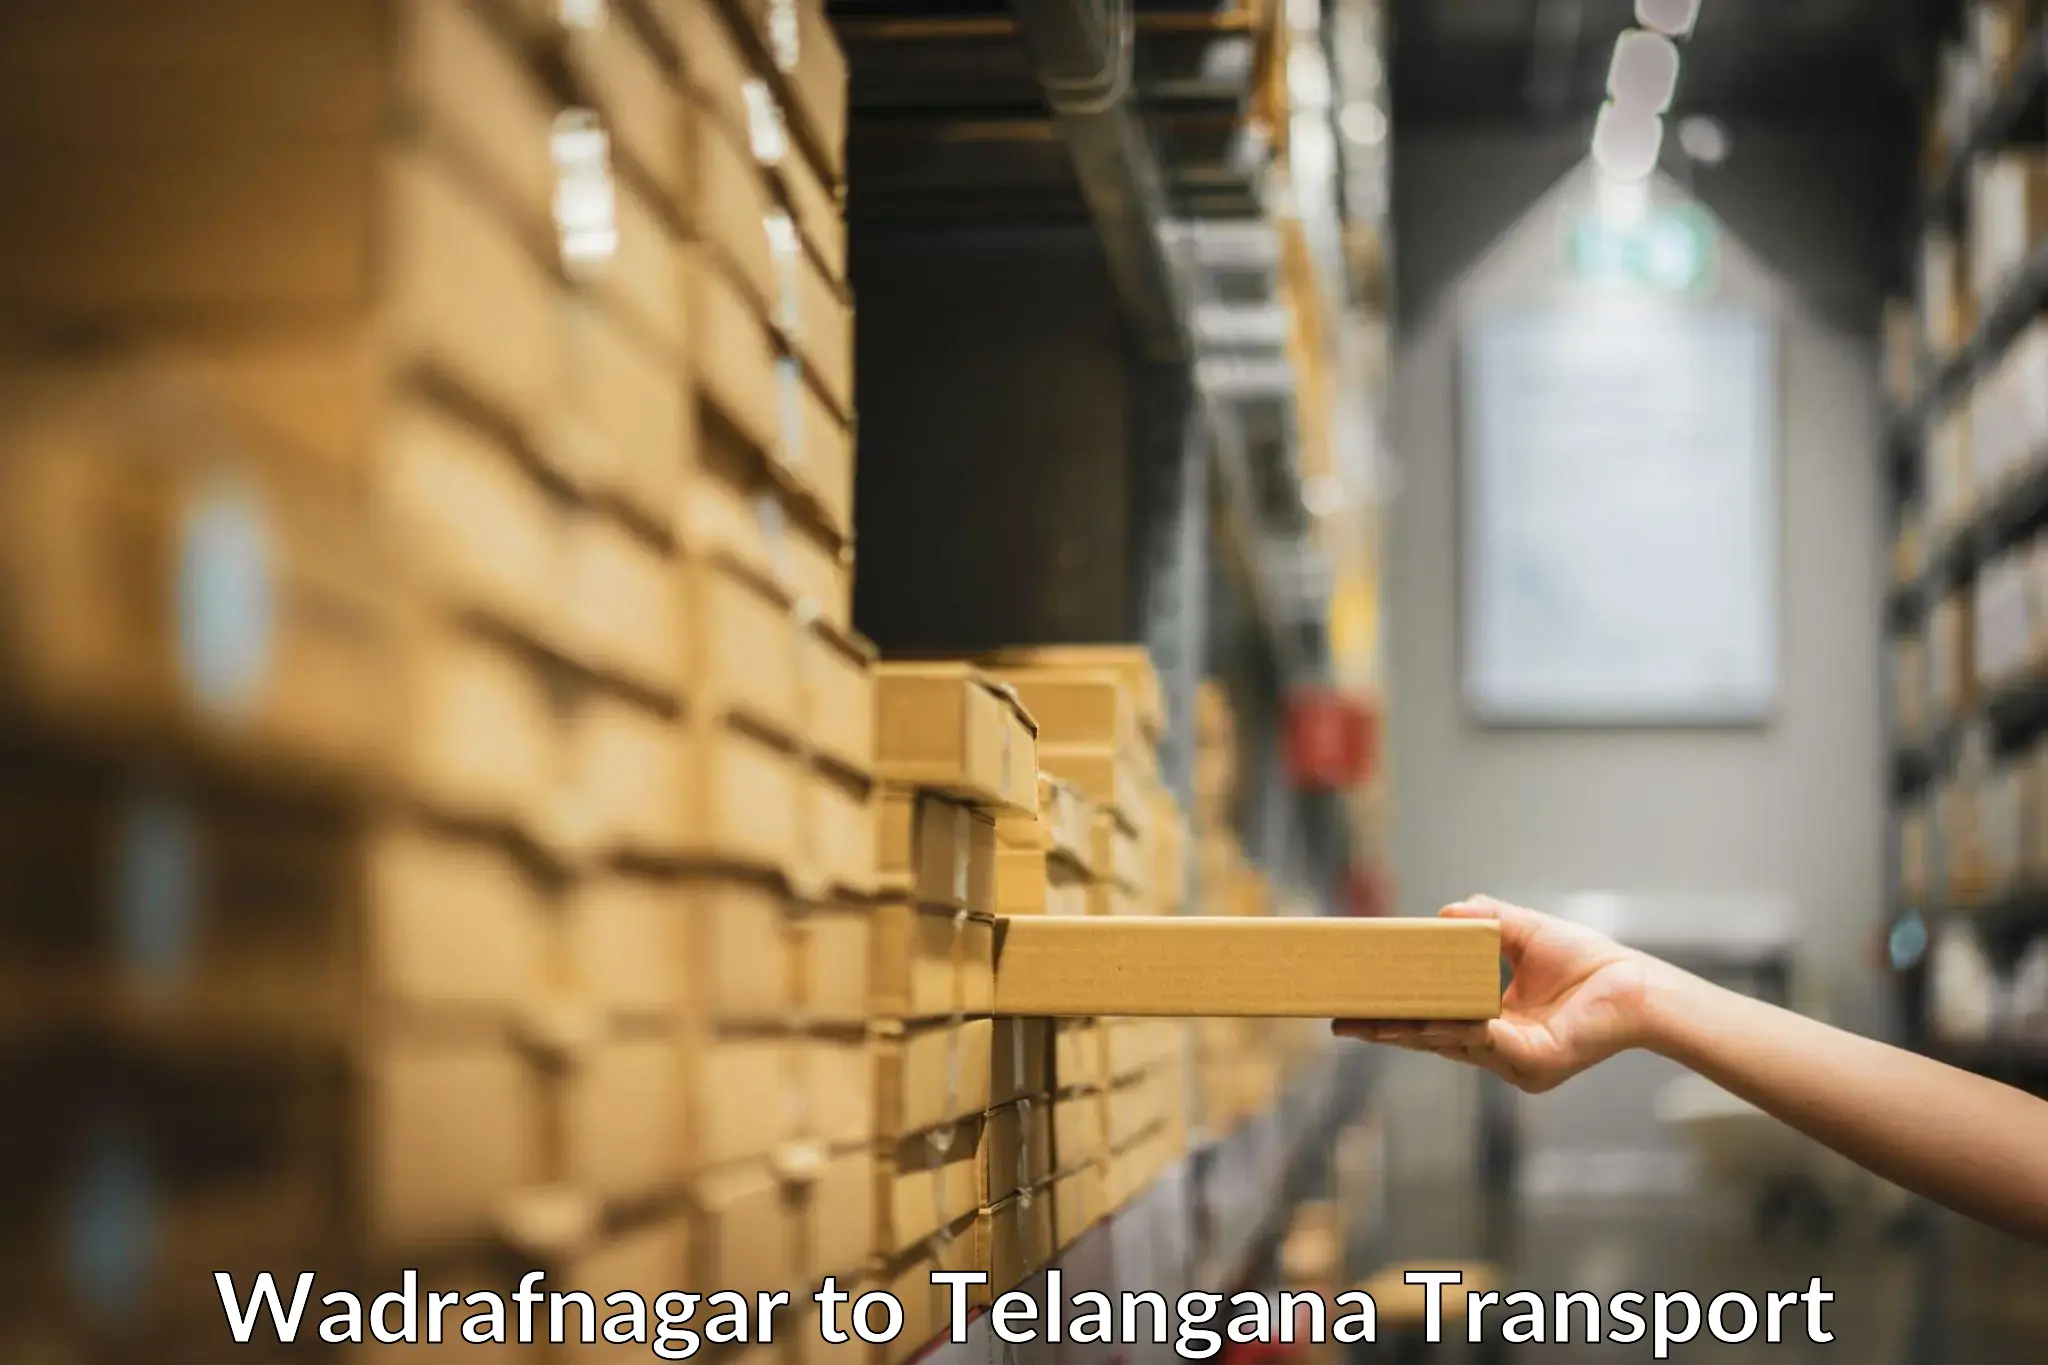 Container transport service Wadrafnagar to Kakeshwaram